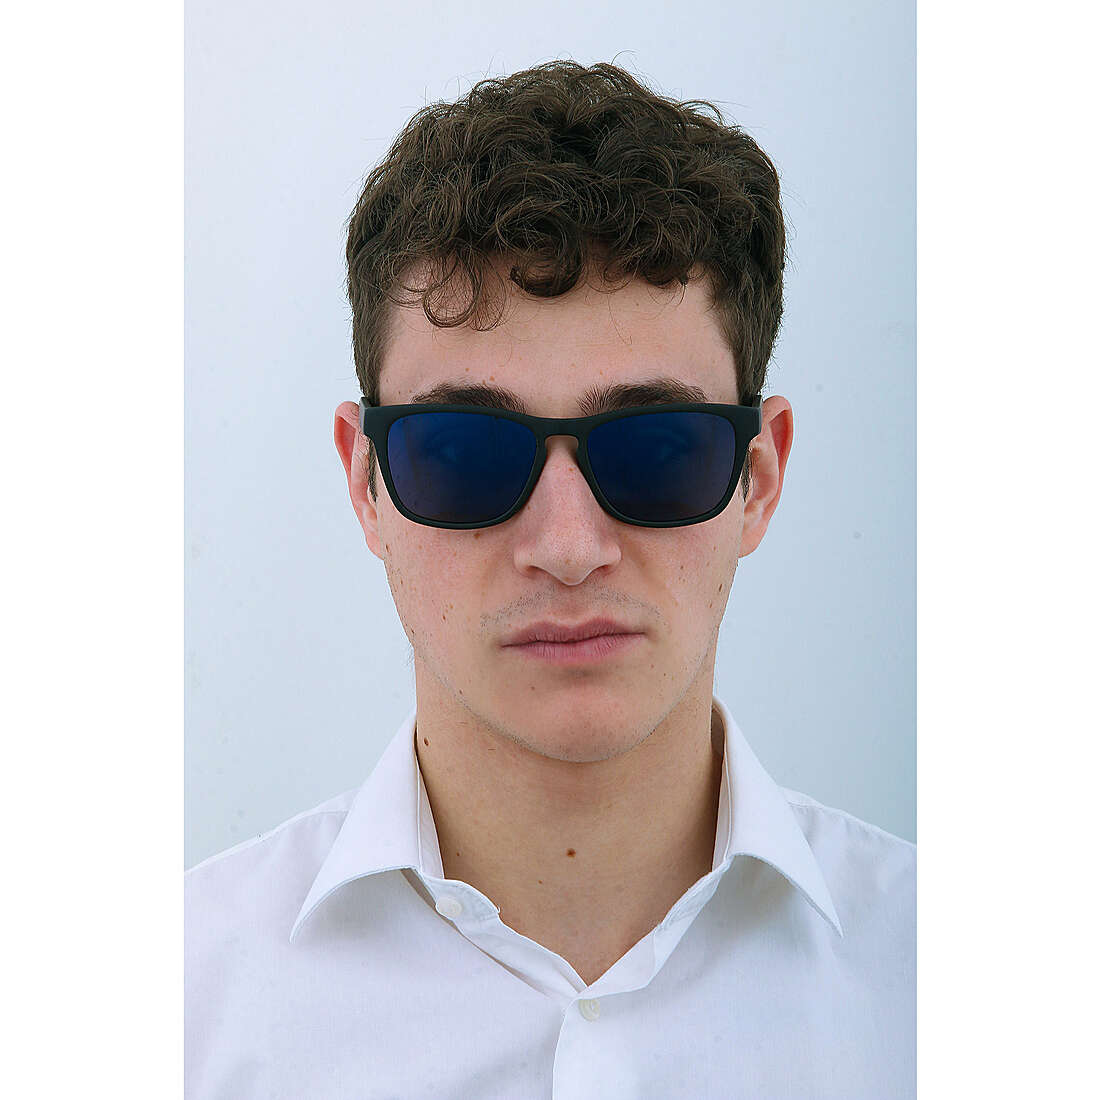 Calvin Klein Jeans sunglasses man 594695517002 wearing